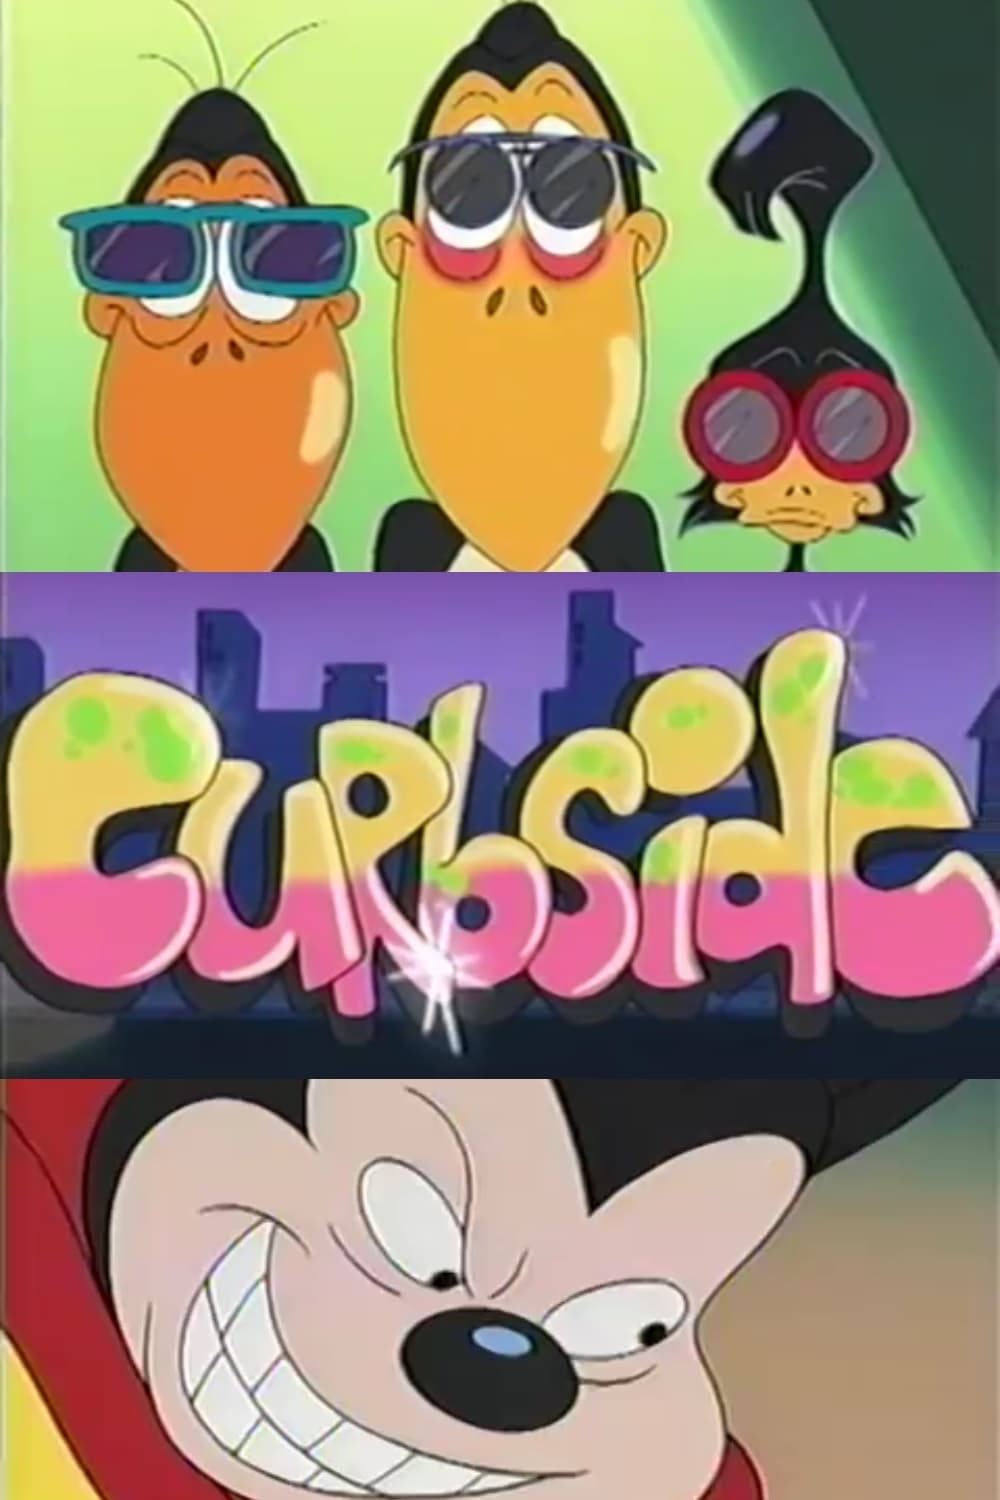 Curbside (1999)